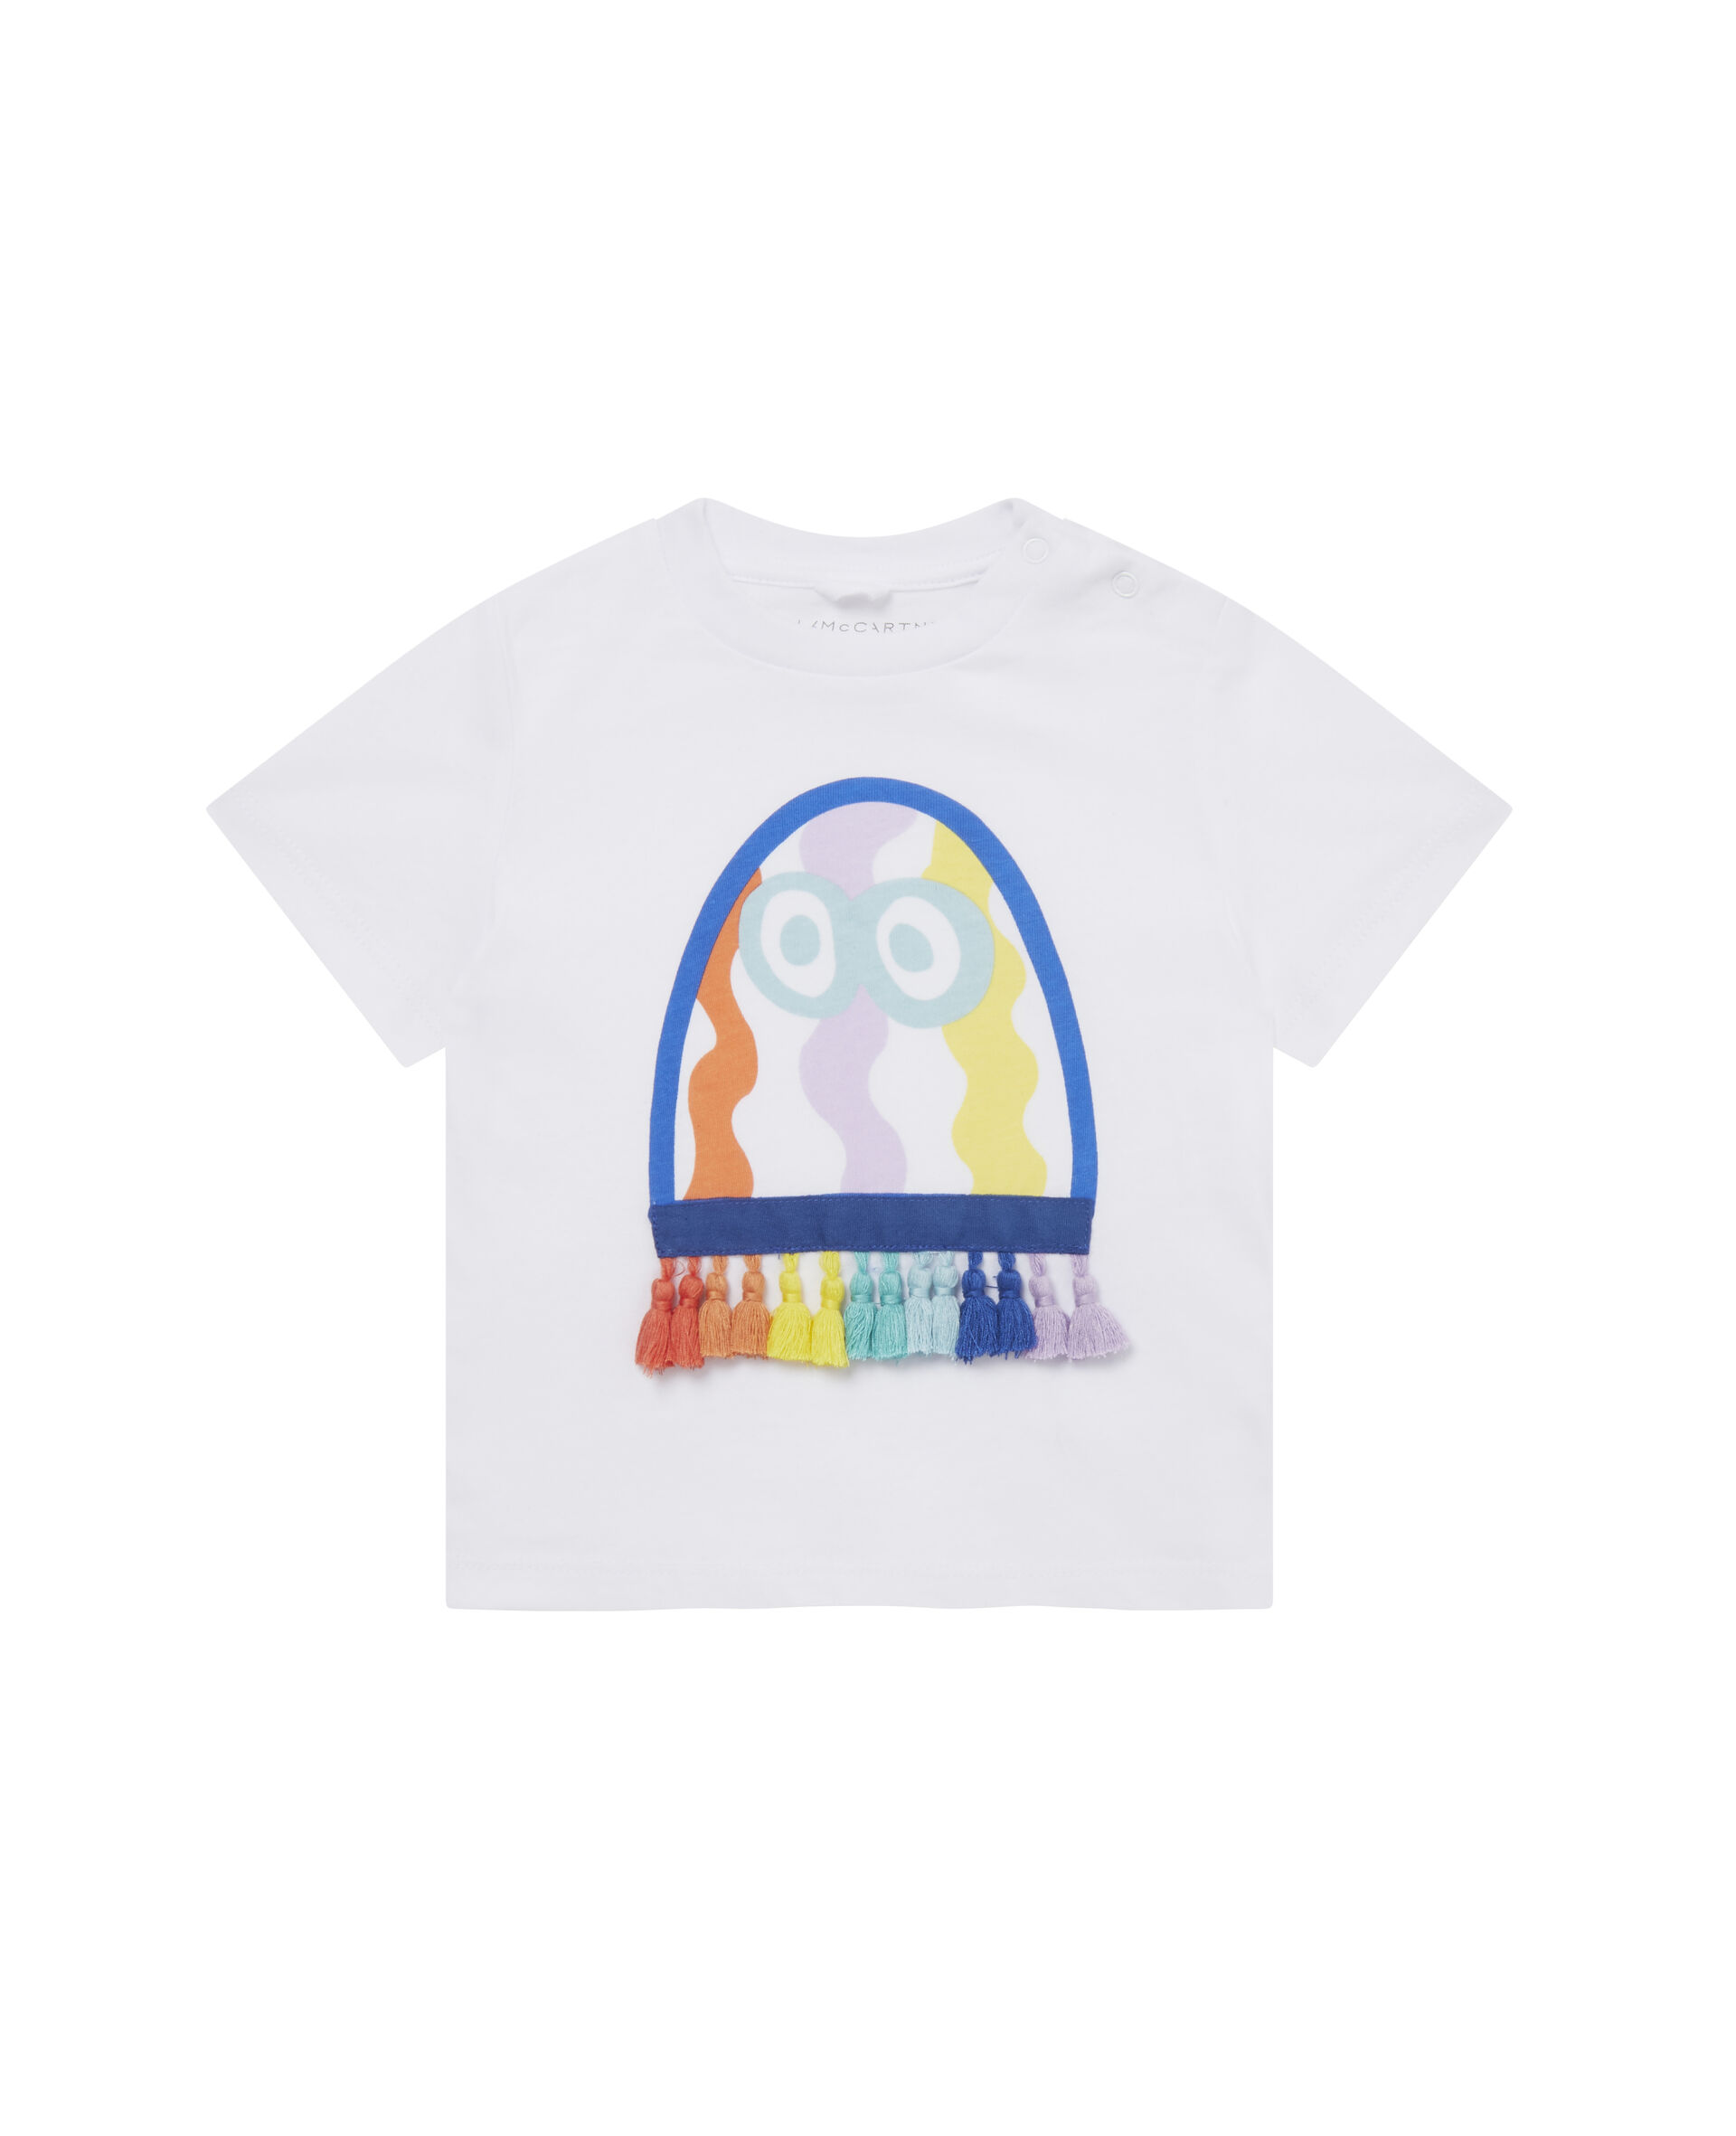 Jellyfish Print Cotton T-Shirt-White-large